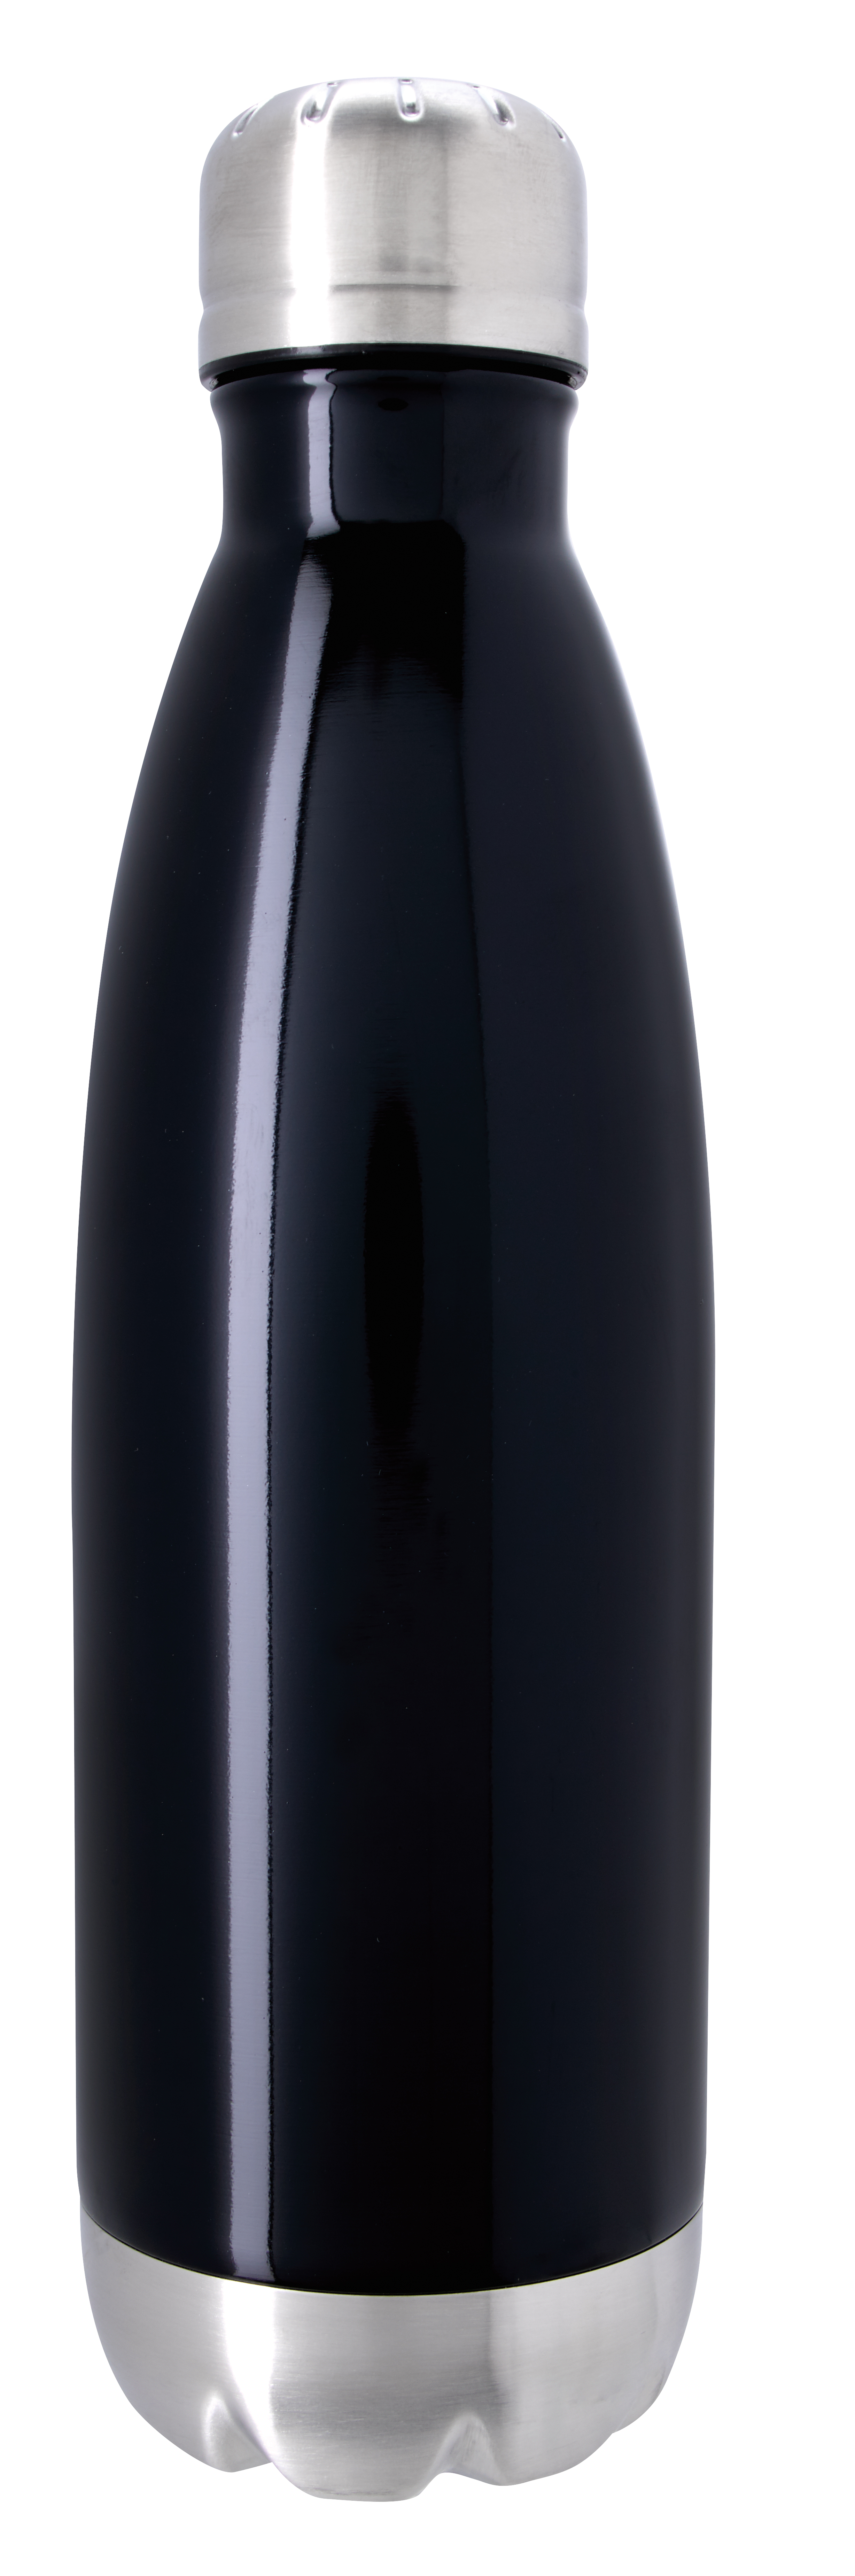 Good Value 46227 - Reef Stainless Steel Bottle - 18 oz.